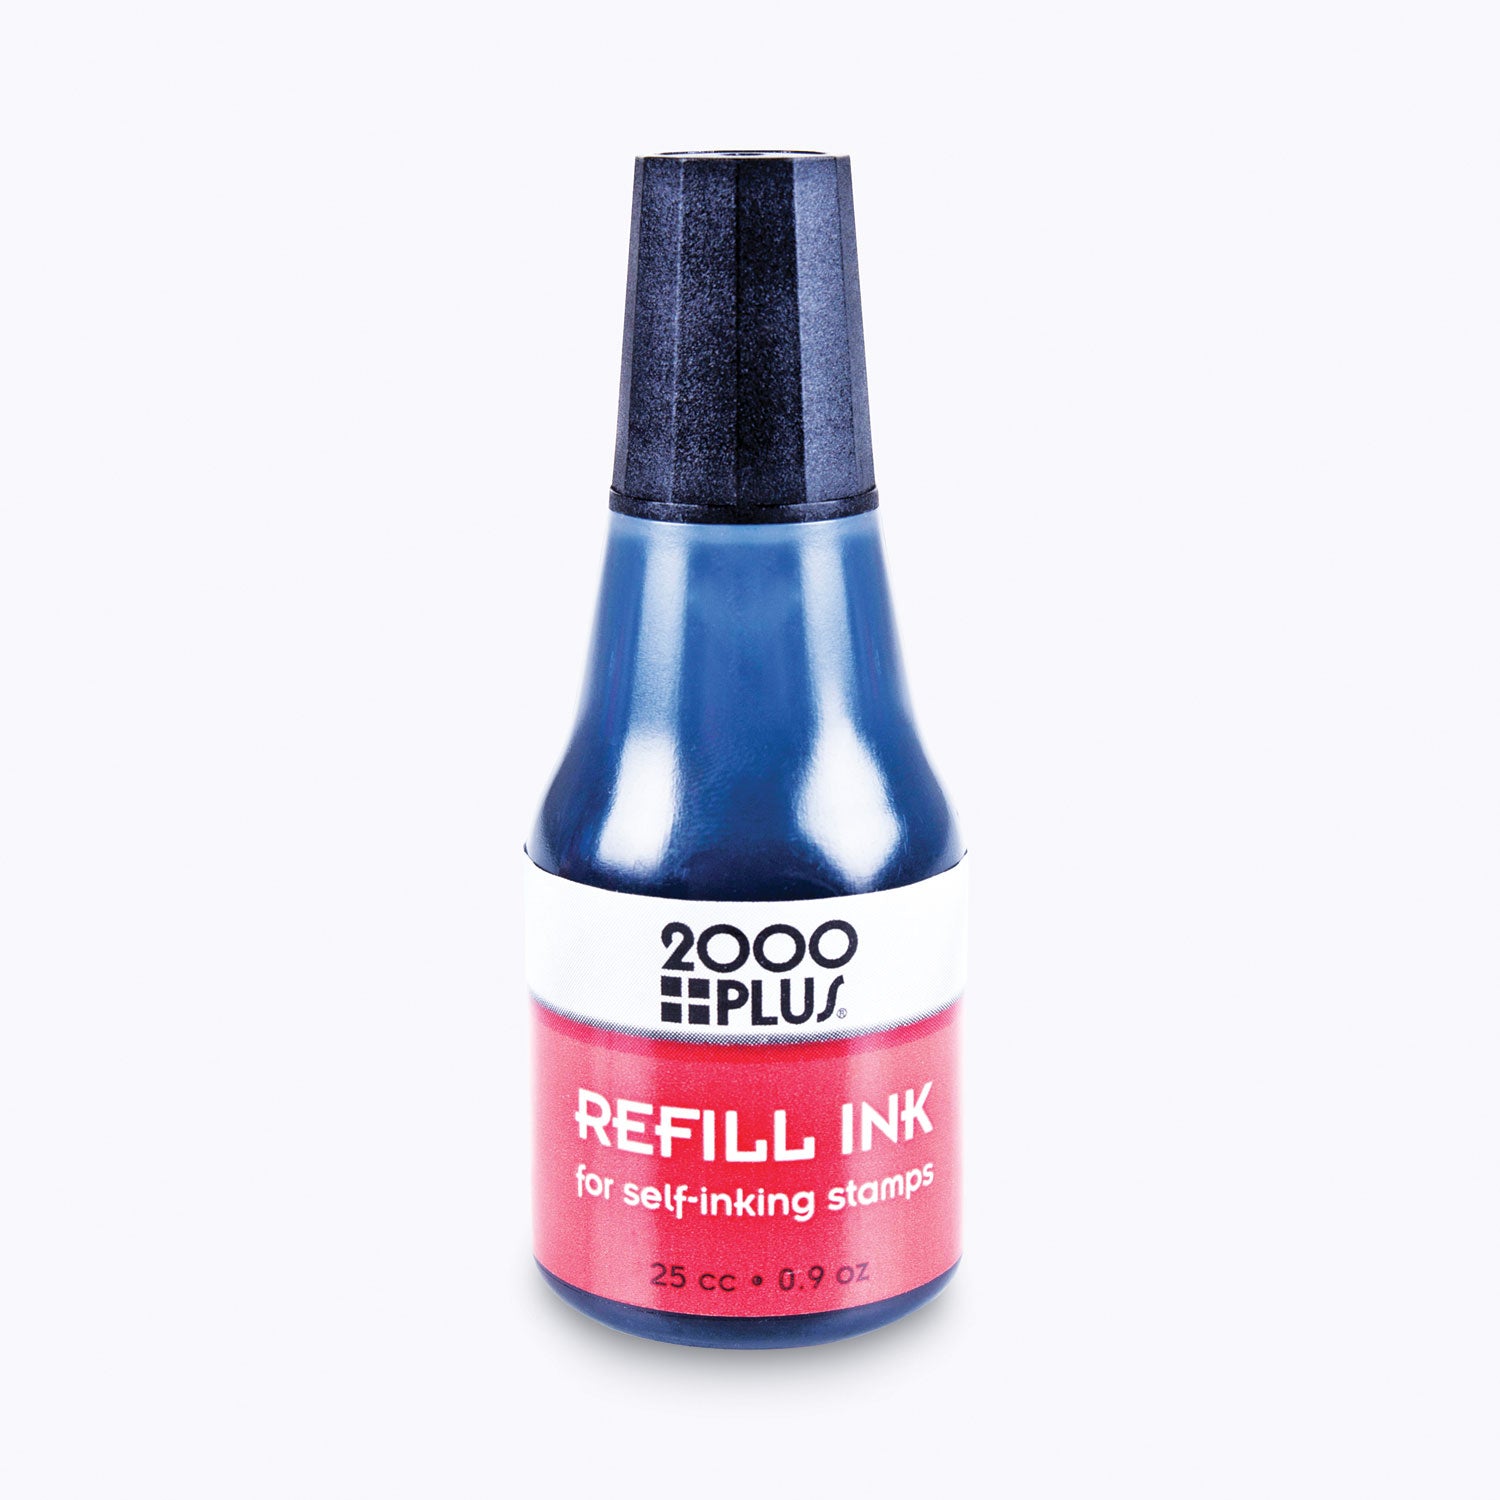 Self-Inking Refill Ink, 0.9 oz. Bottle, Black - 